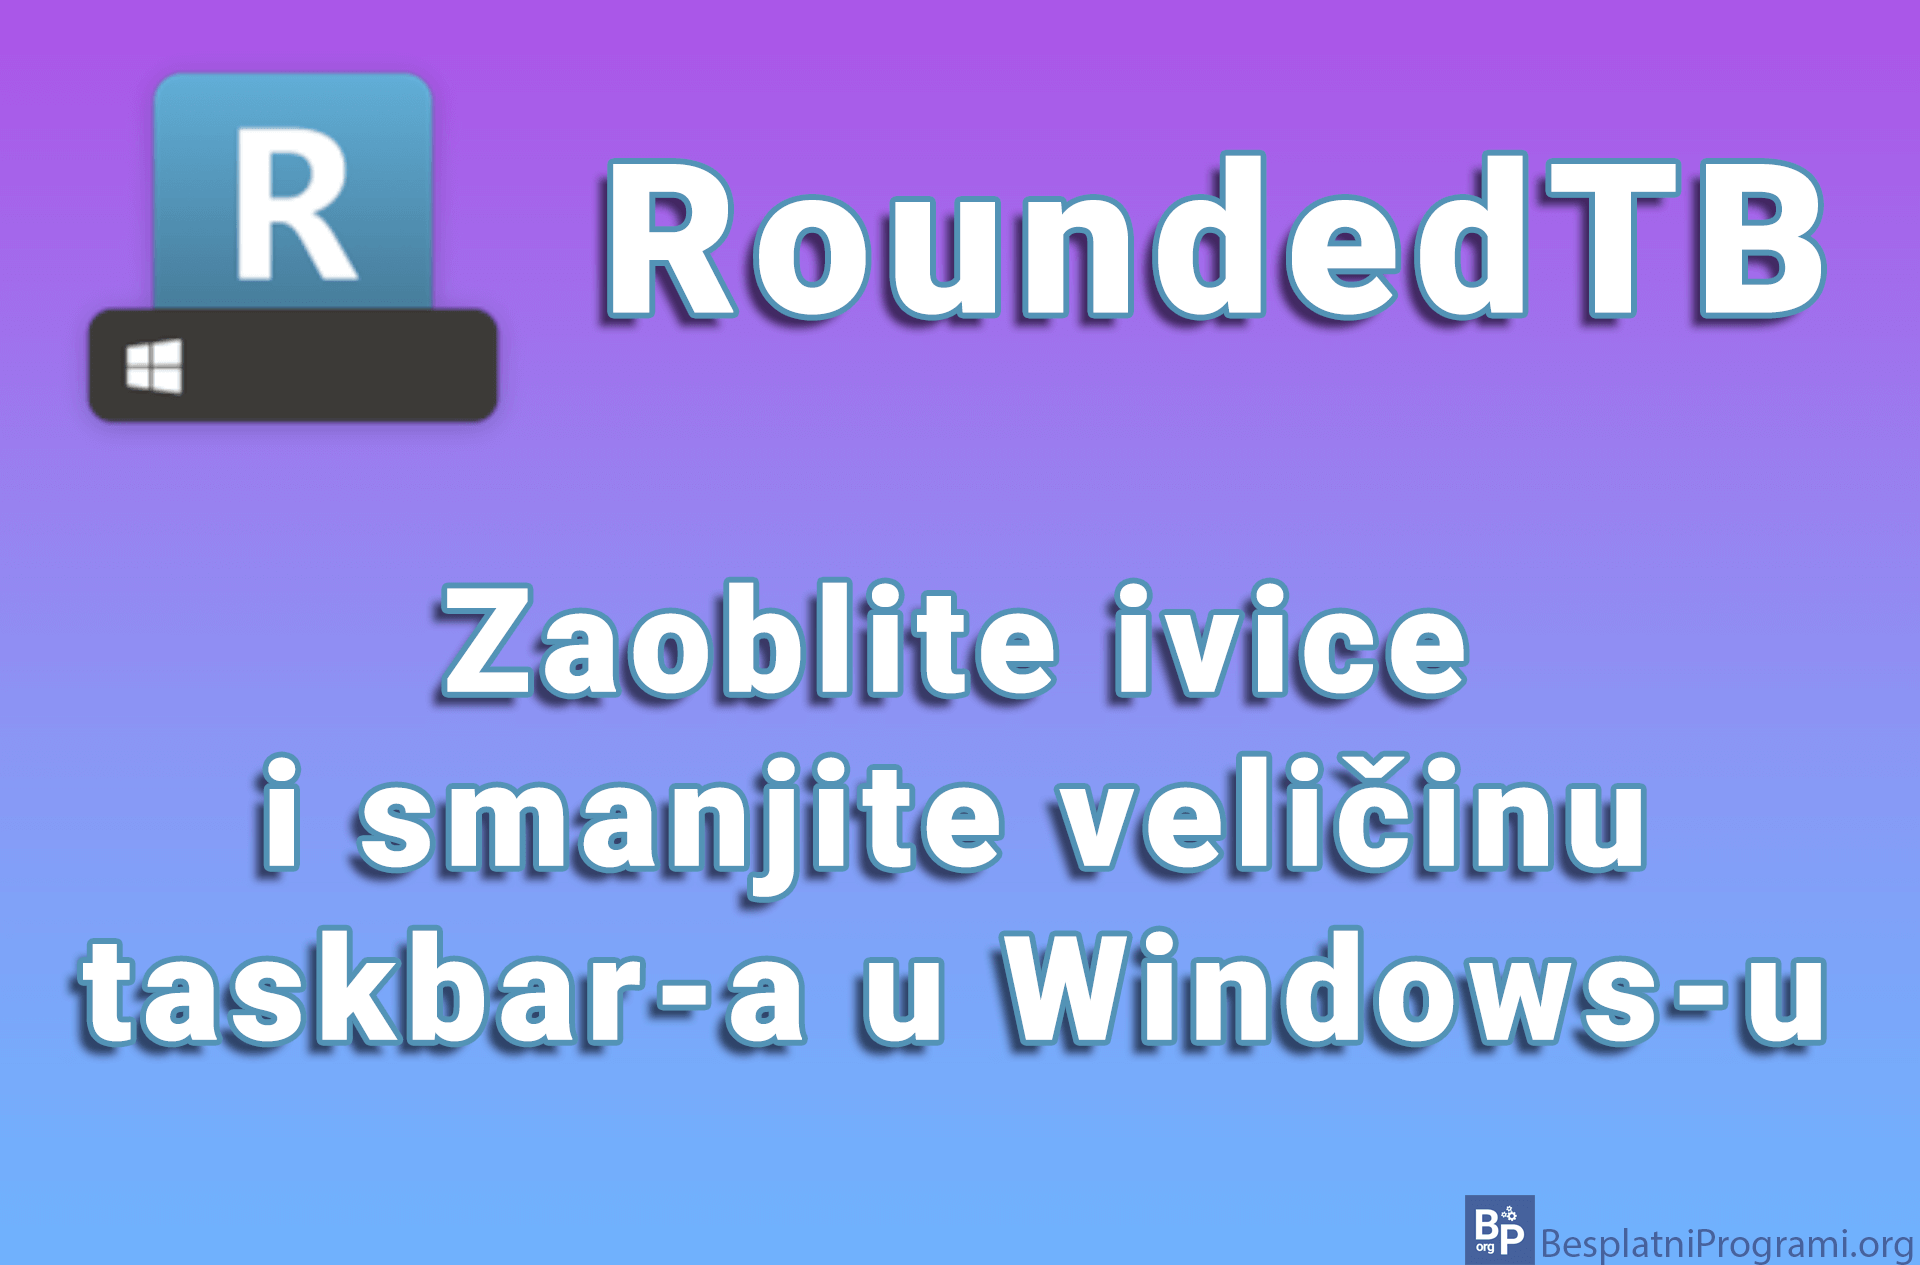 RoundedTB – Zaoblite ivice i smanjite veličinu taskbar-a u Windows-u